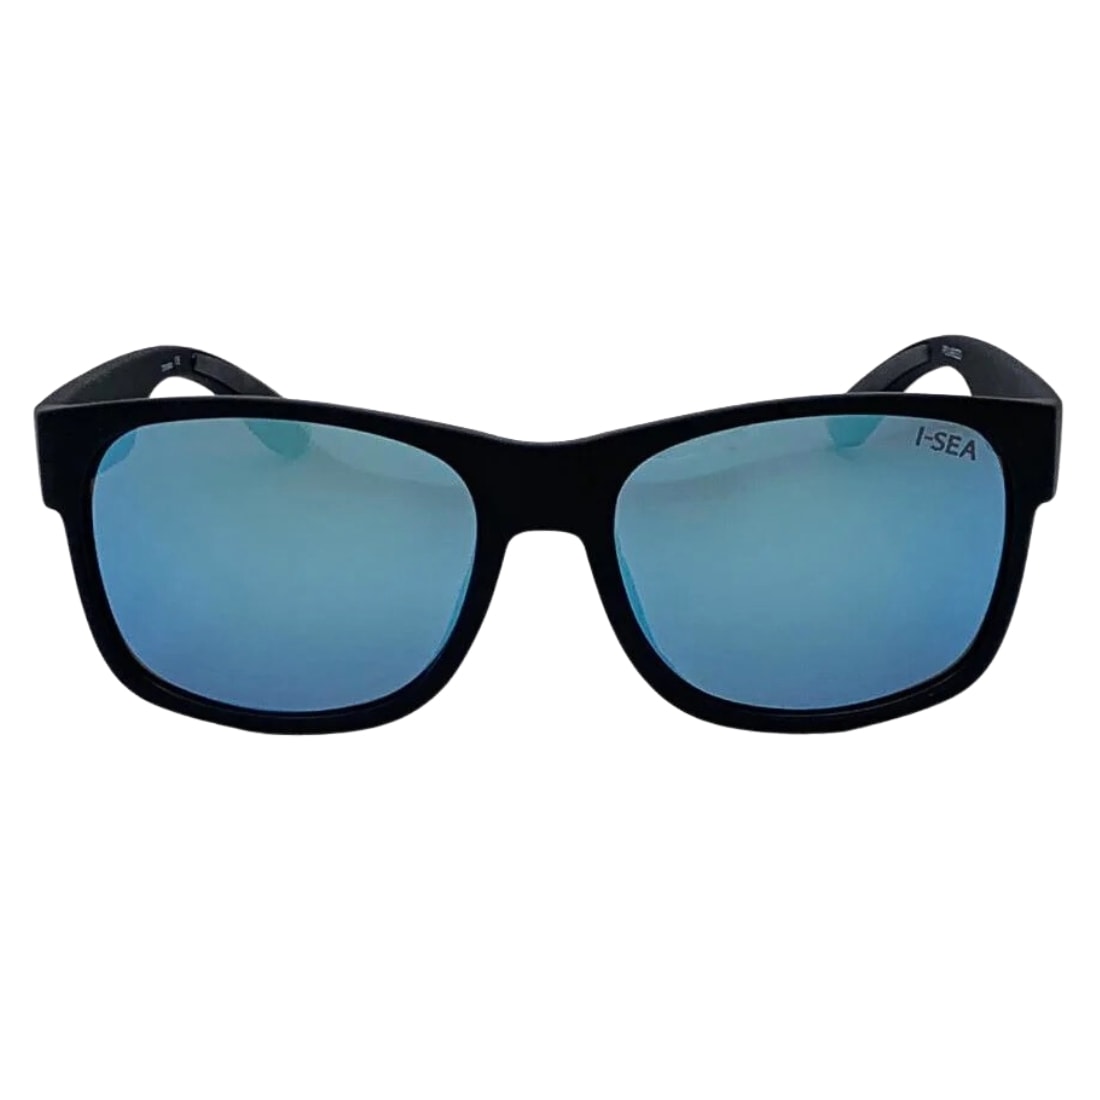 I-Sea Seven Seas Polarised Sunglasses - Black Rubber/Ice Blue Mirror  Polarized Lens | Free UK Delivery Available - Yakwax